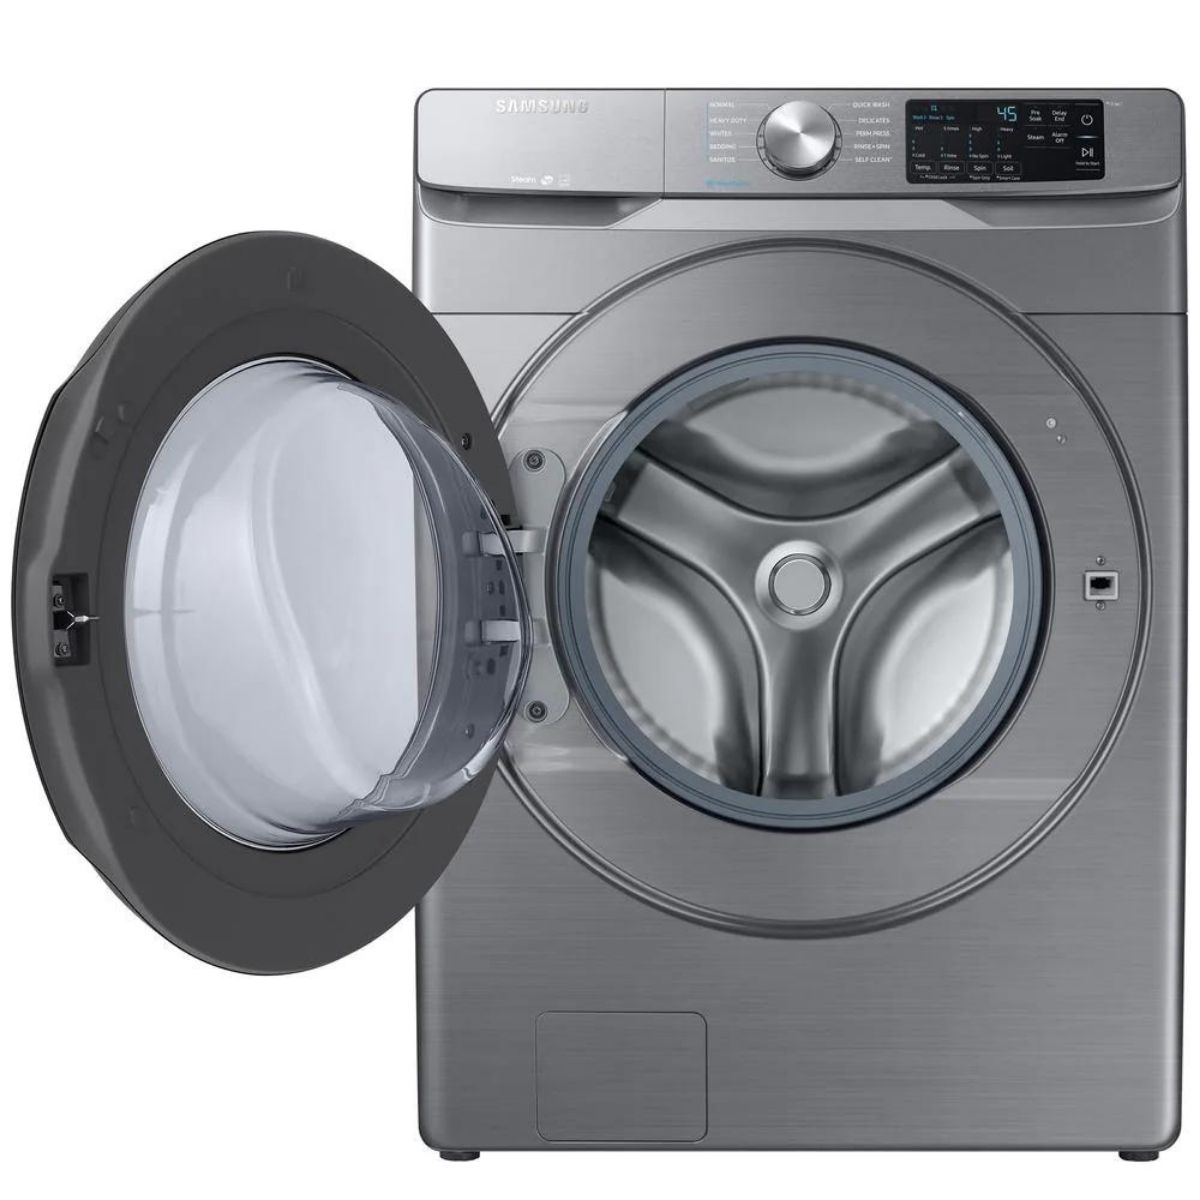 The Best Home Depot Black Friday Option: Samsung Platinum Front Load Washing Machine